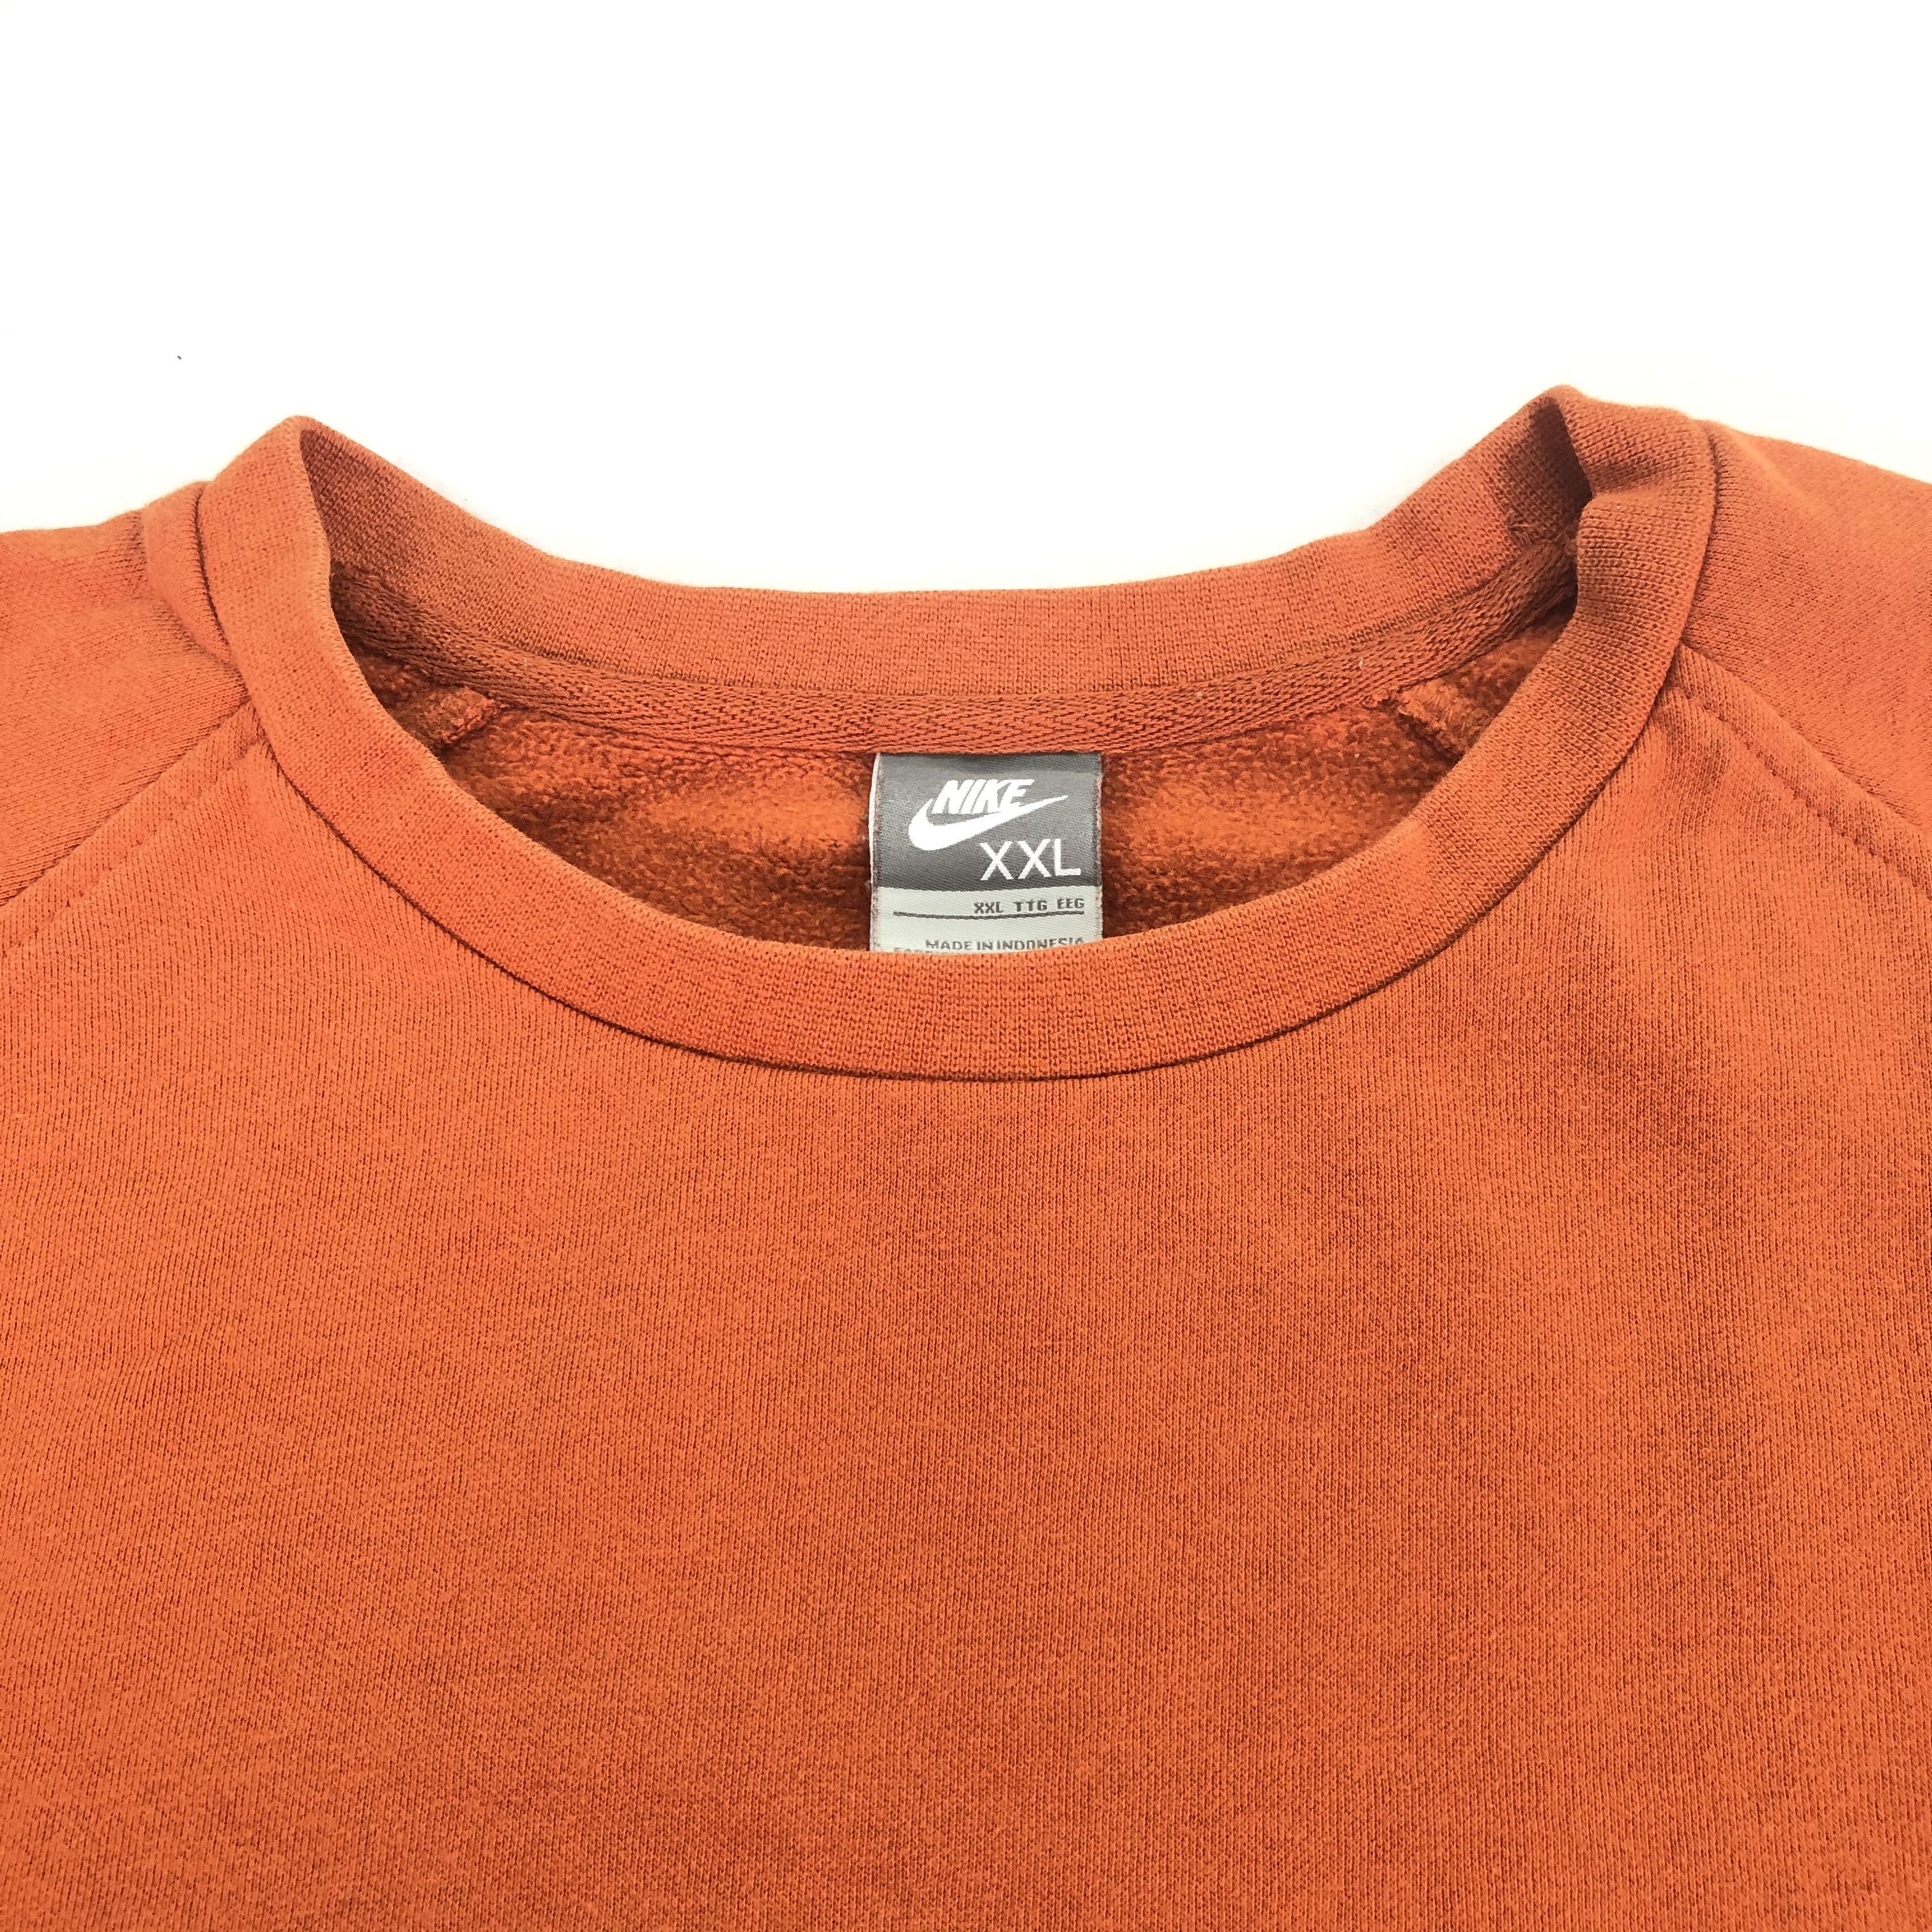 Nike Nike Sweatshirt Logo Pull Over Orange Colour Size US XXL / EU 58 / 5 - 4 Thumbnail